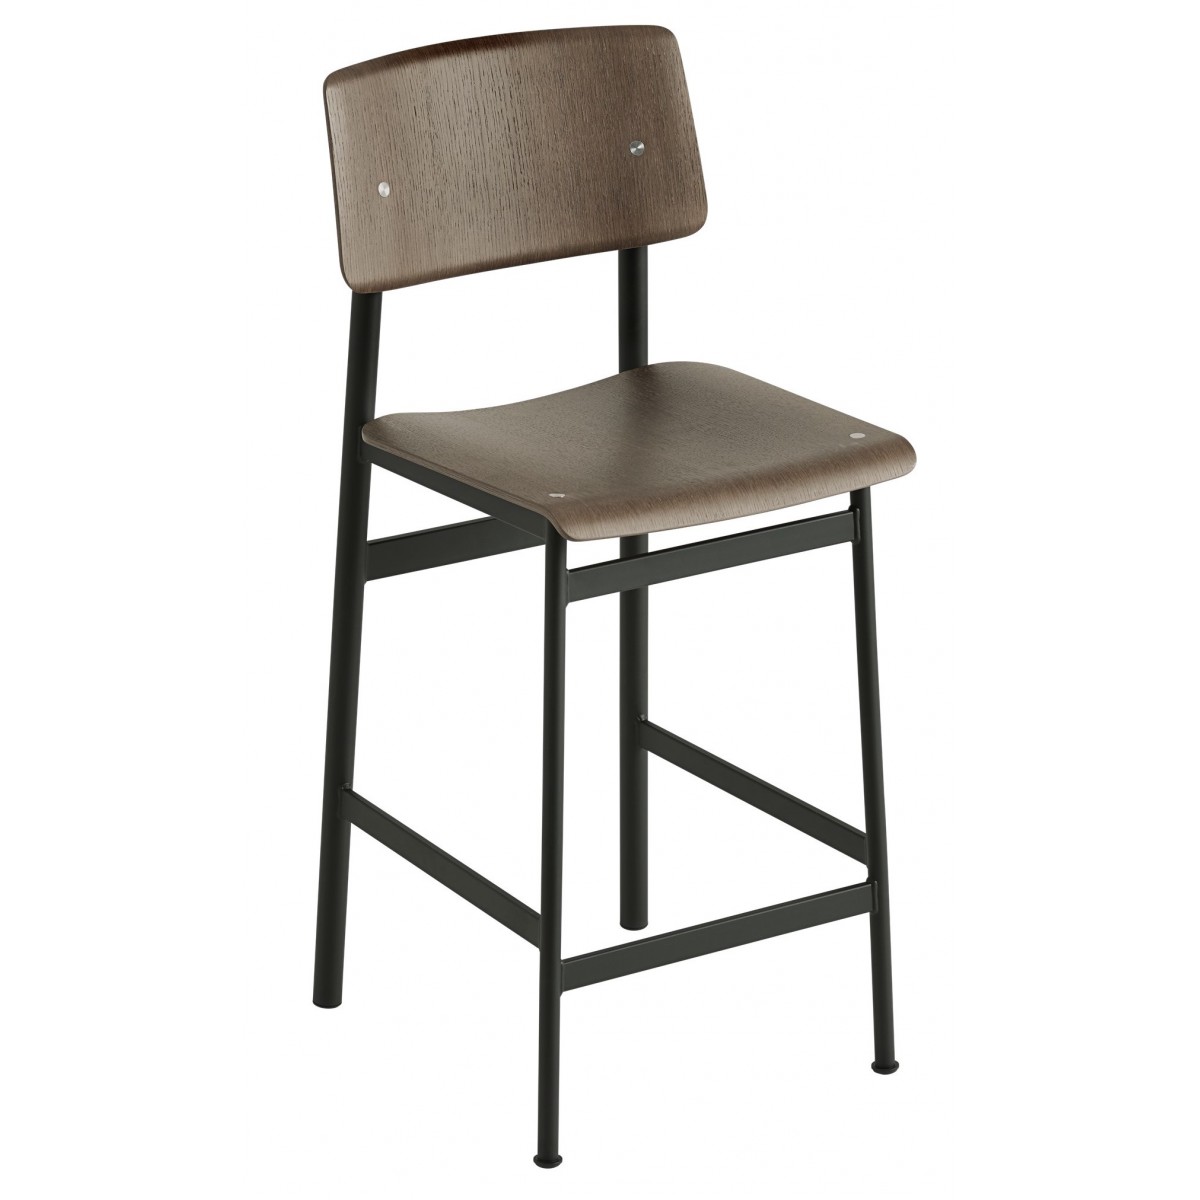 H65cm - black/stained dark brown - Loft counter stool